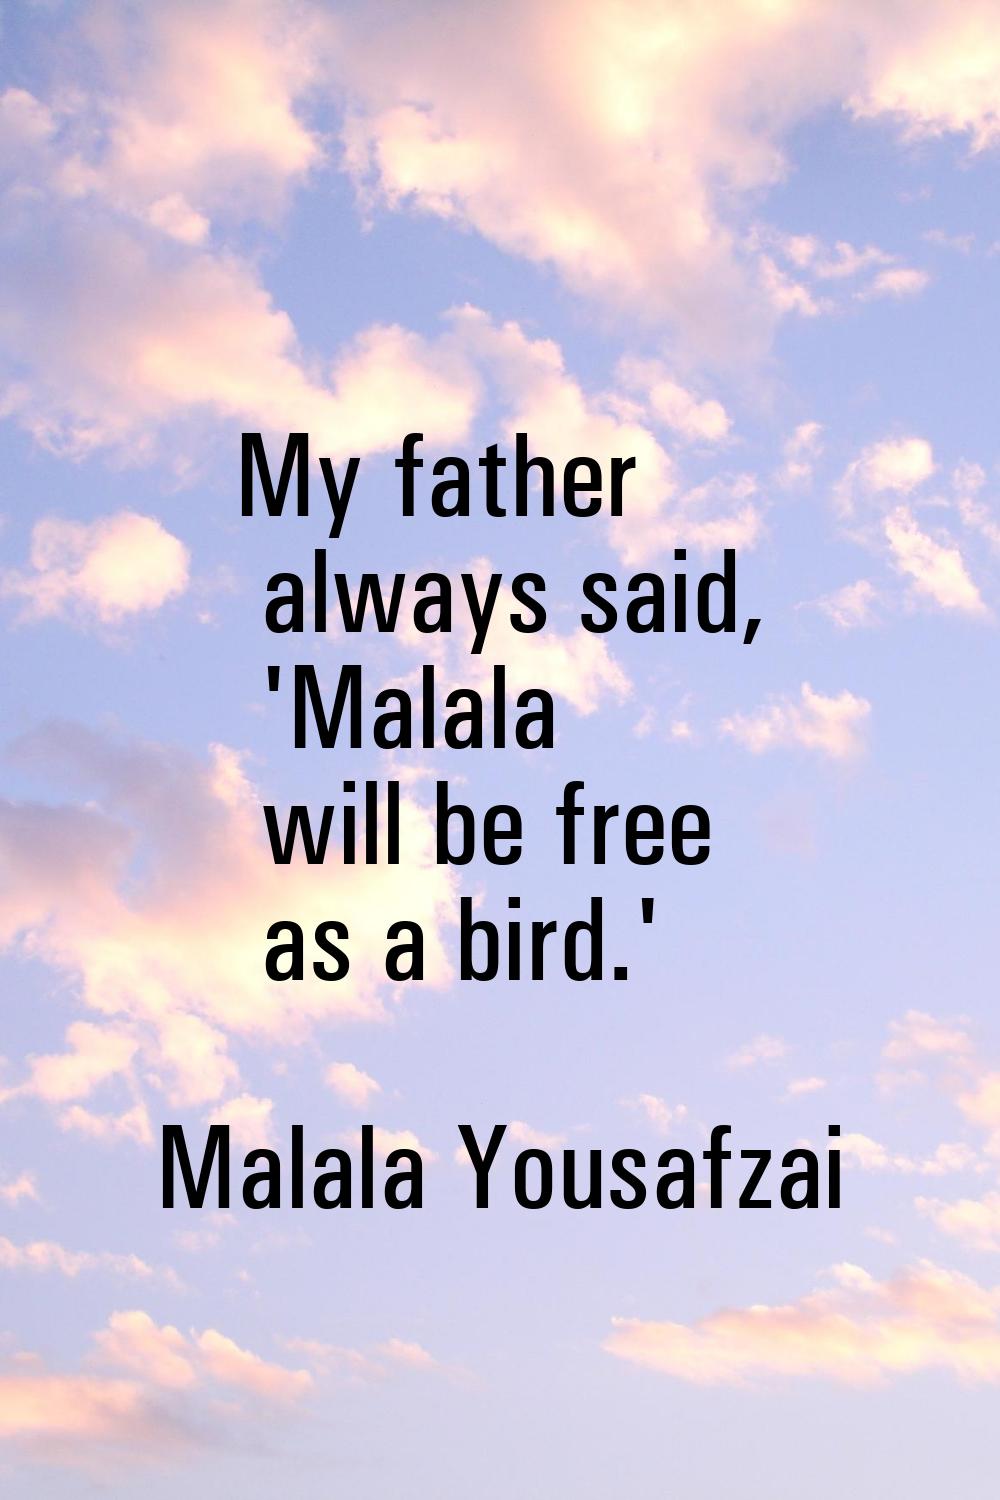 My father always said, 'Malala will be free as a bird.'